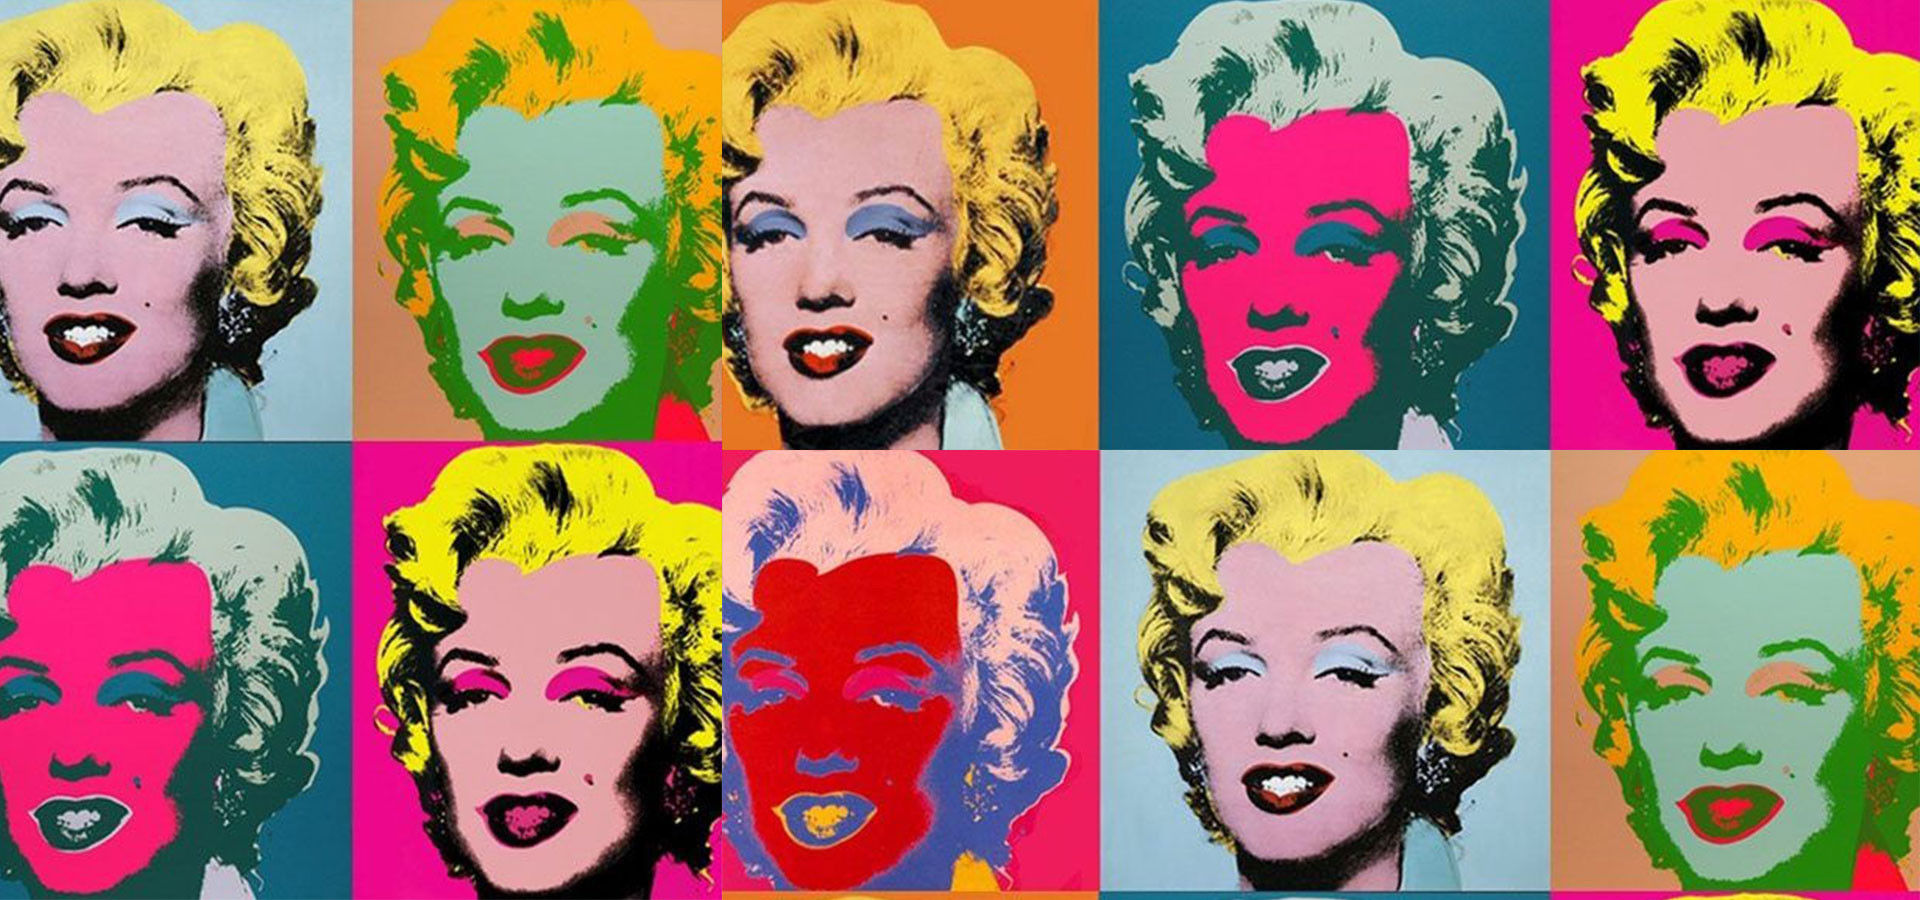 Esempio di Pop Art: Dittico di Marilyn Monroe di Andy Warhol